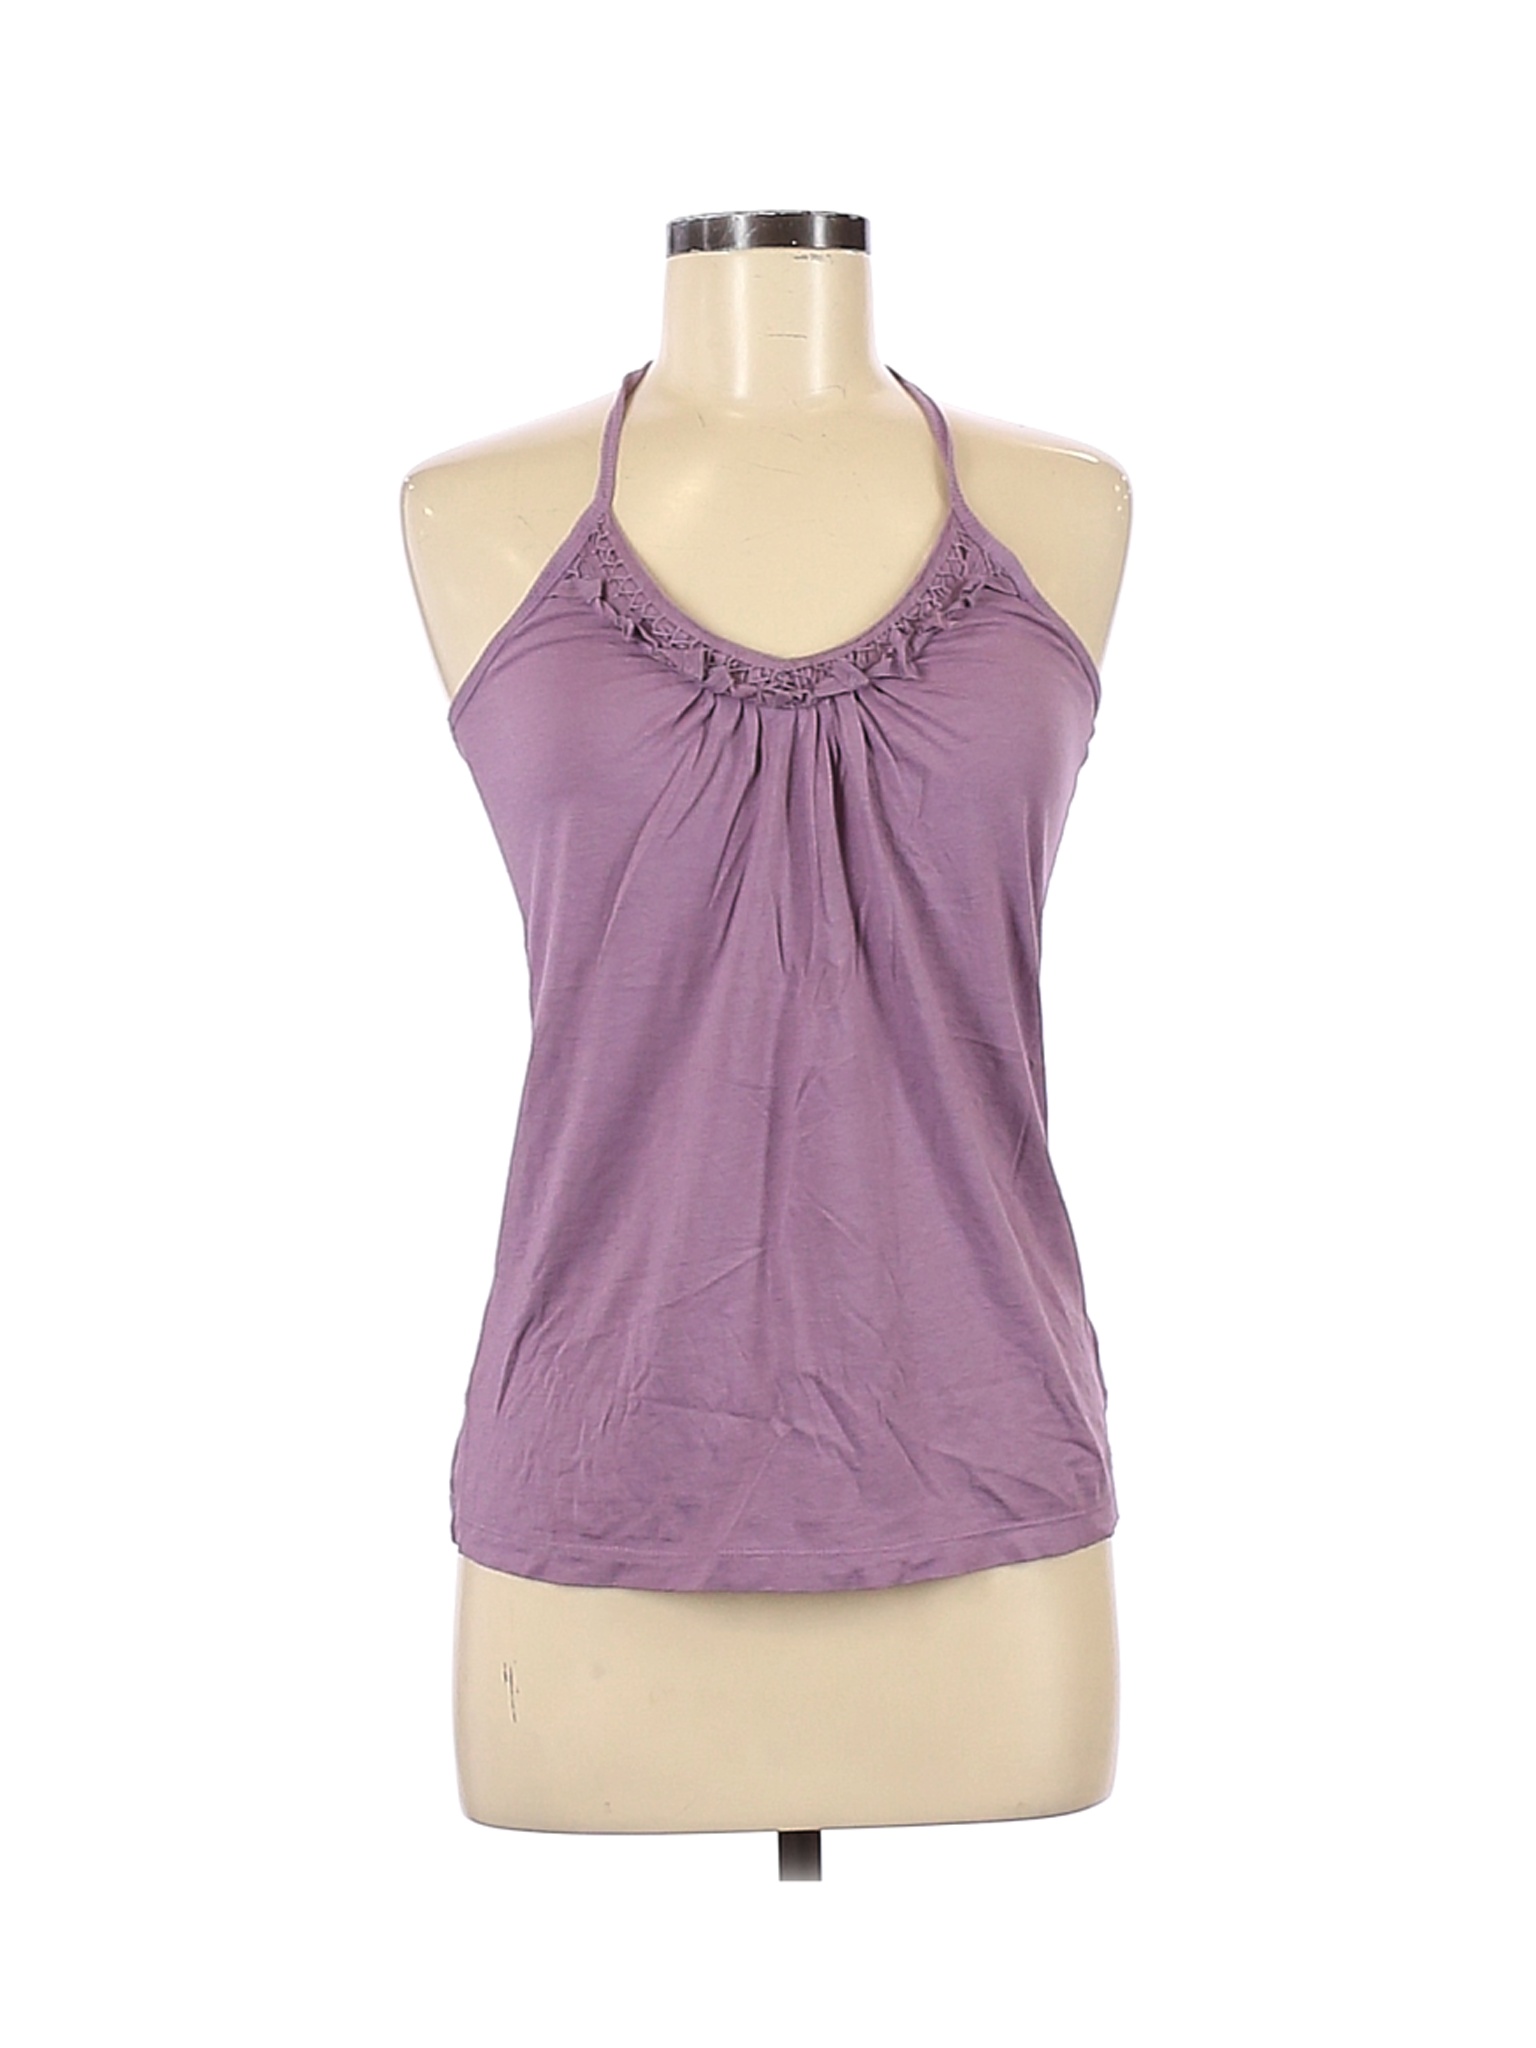 Gap Women Purple Sleeveless Top M | eBay